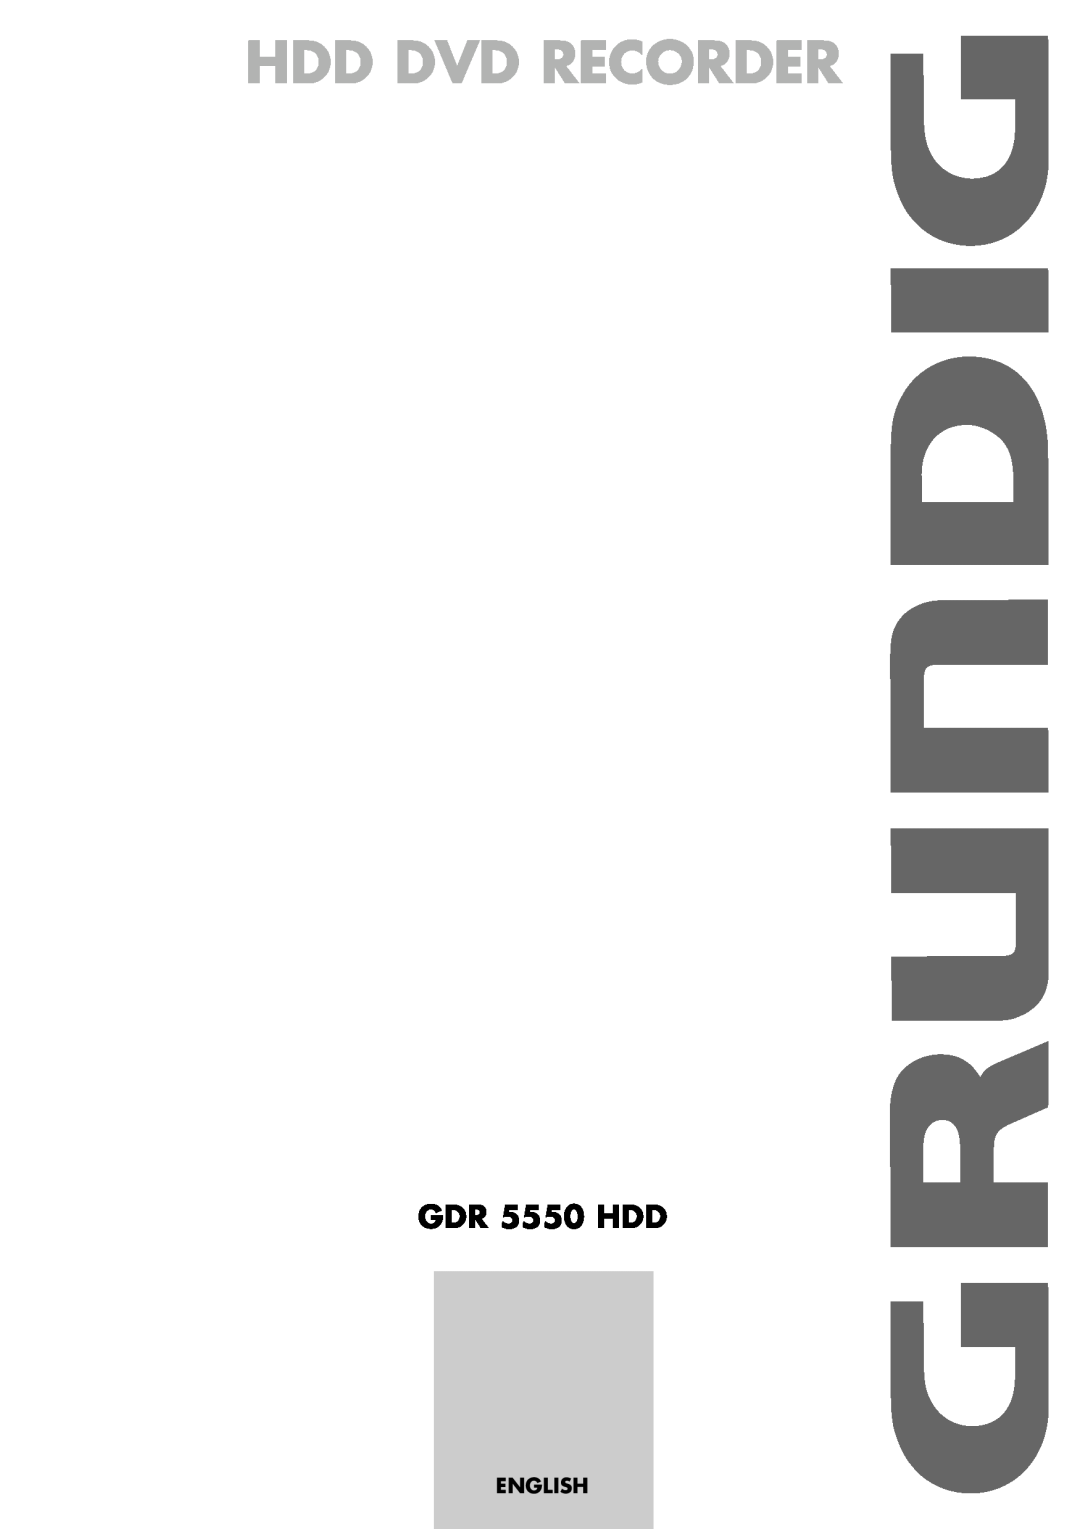 Grundig manual Hdd Dvd Recorder, GDR 5550 HDD, English 